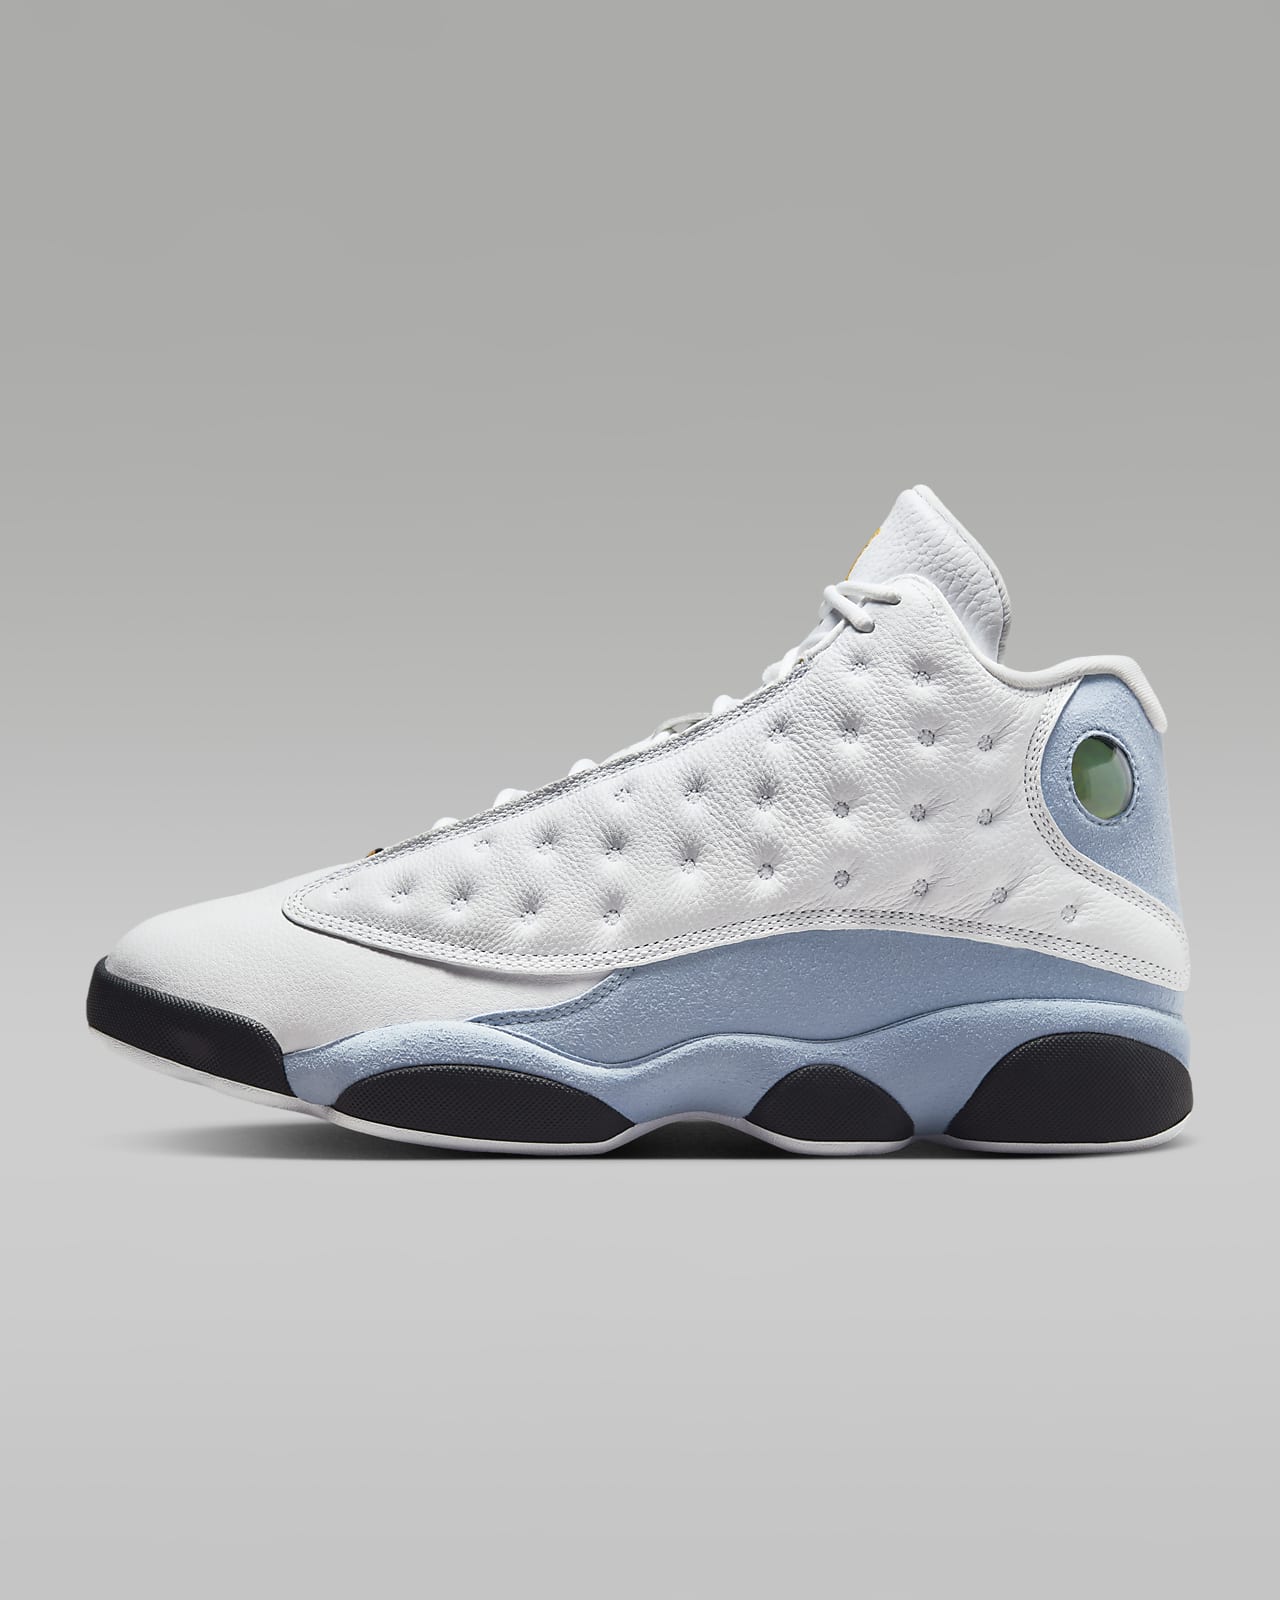 Air Jordan 13 Retro "Blue Grey" Men's Shoes